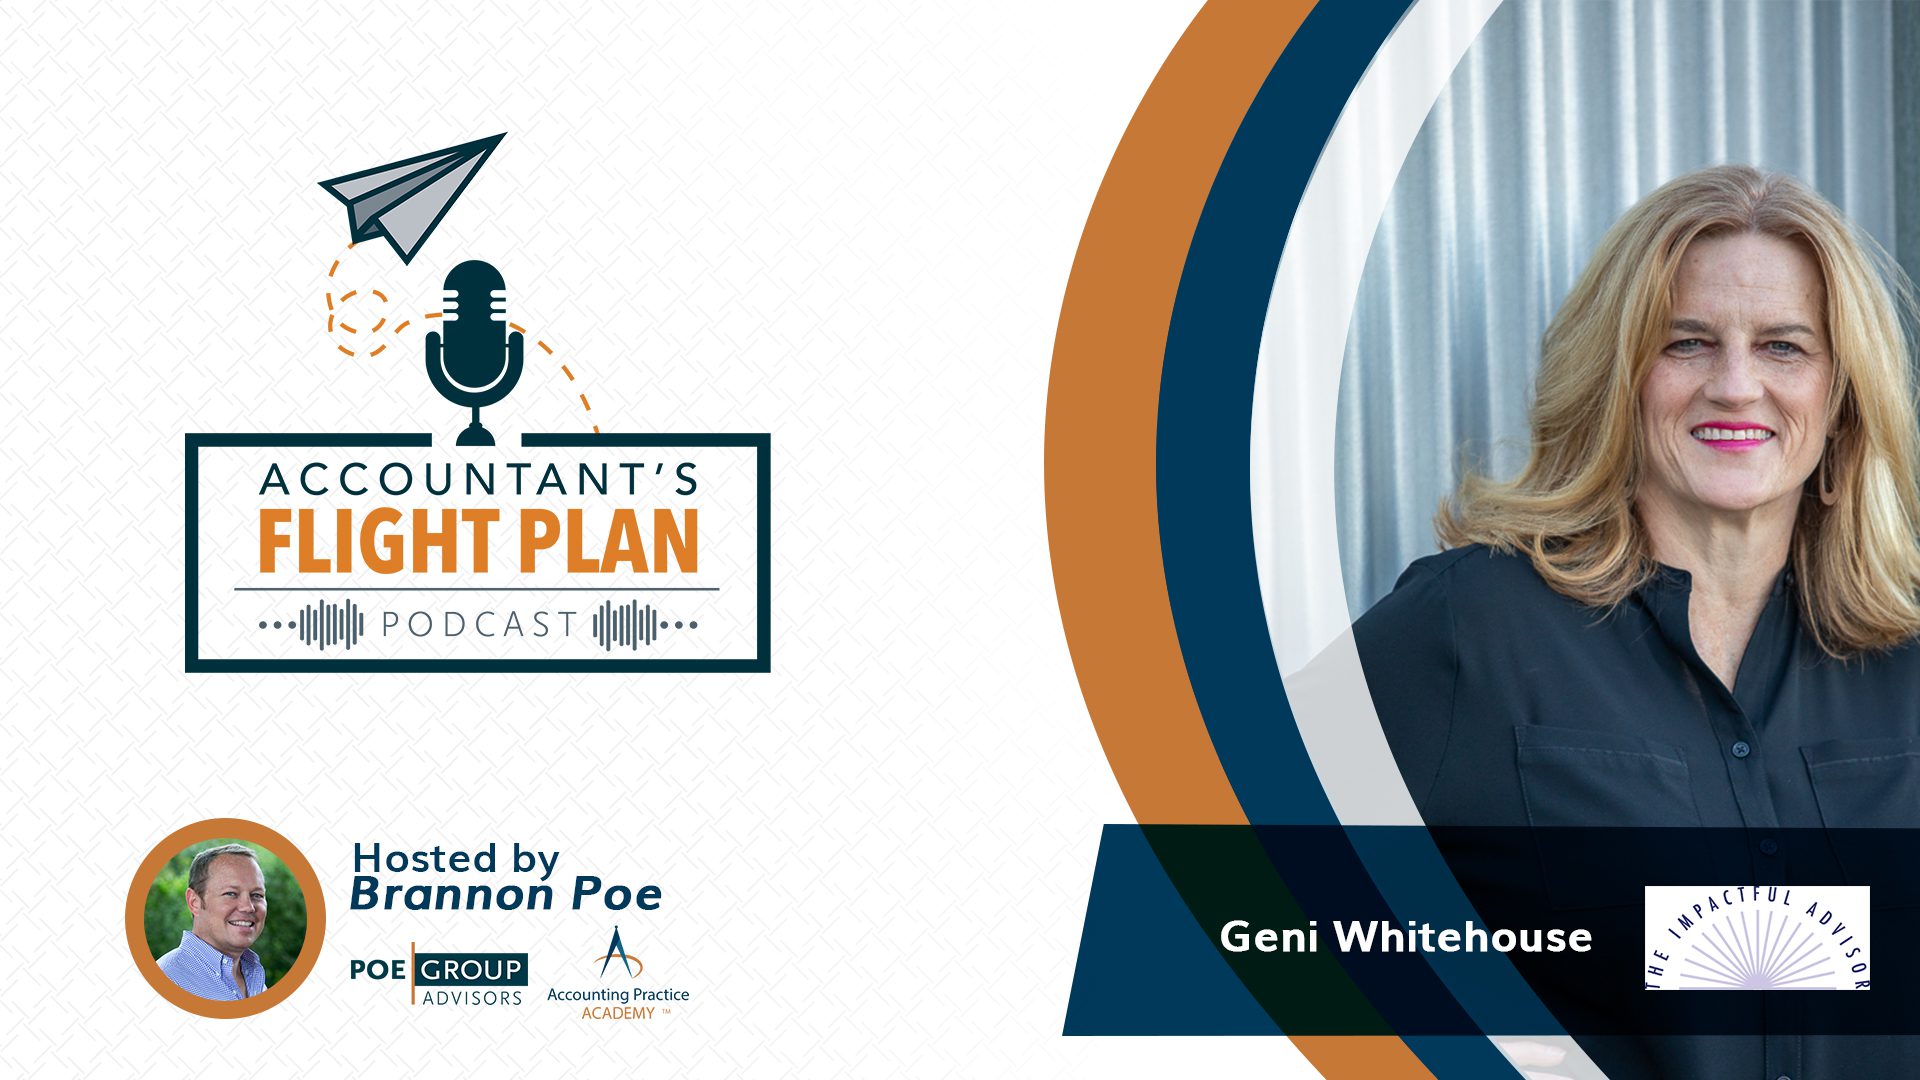 Accountant's Flight Plan Podcast logo with Headshot of Geni Whitehouse